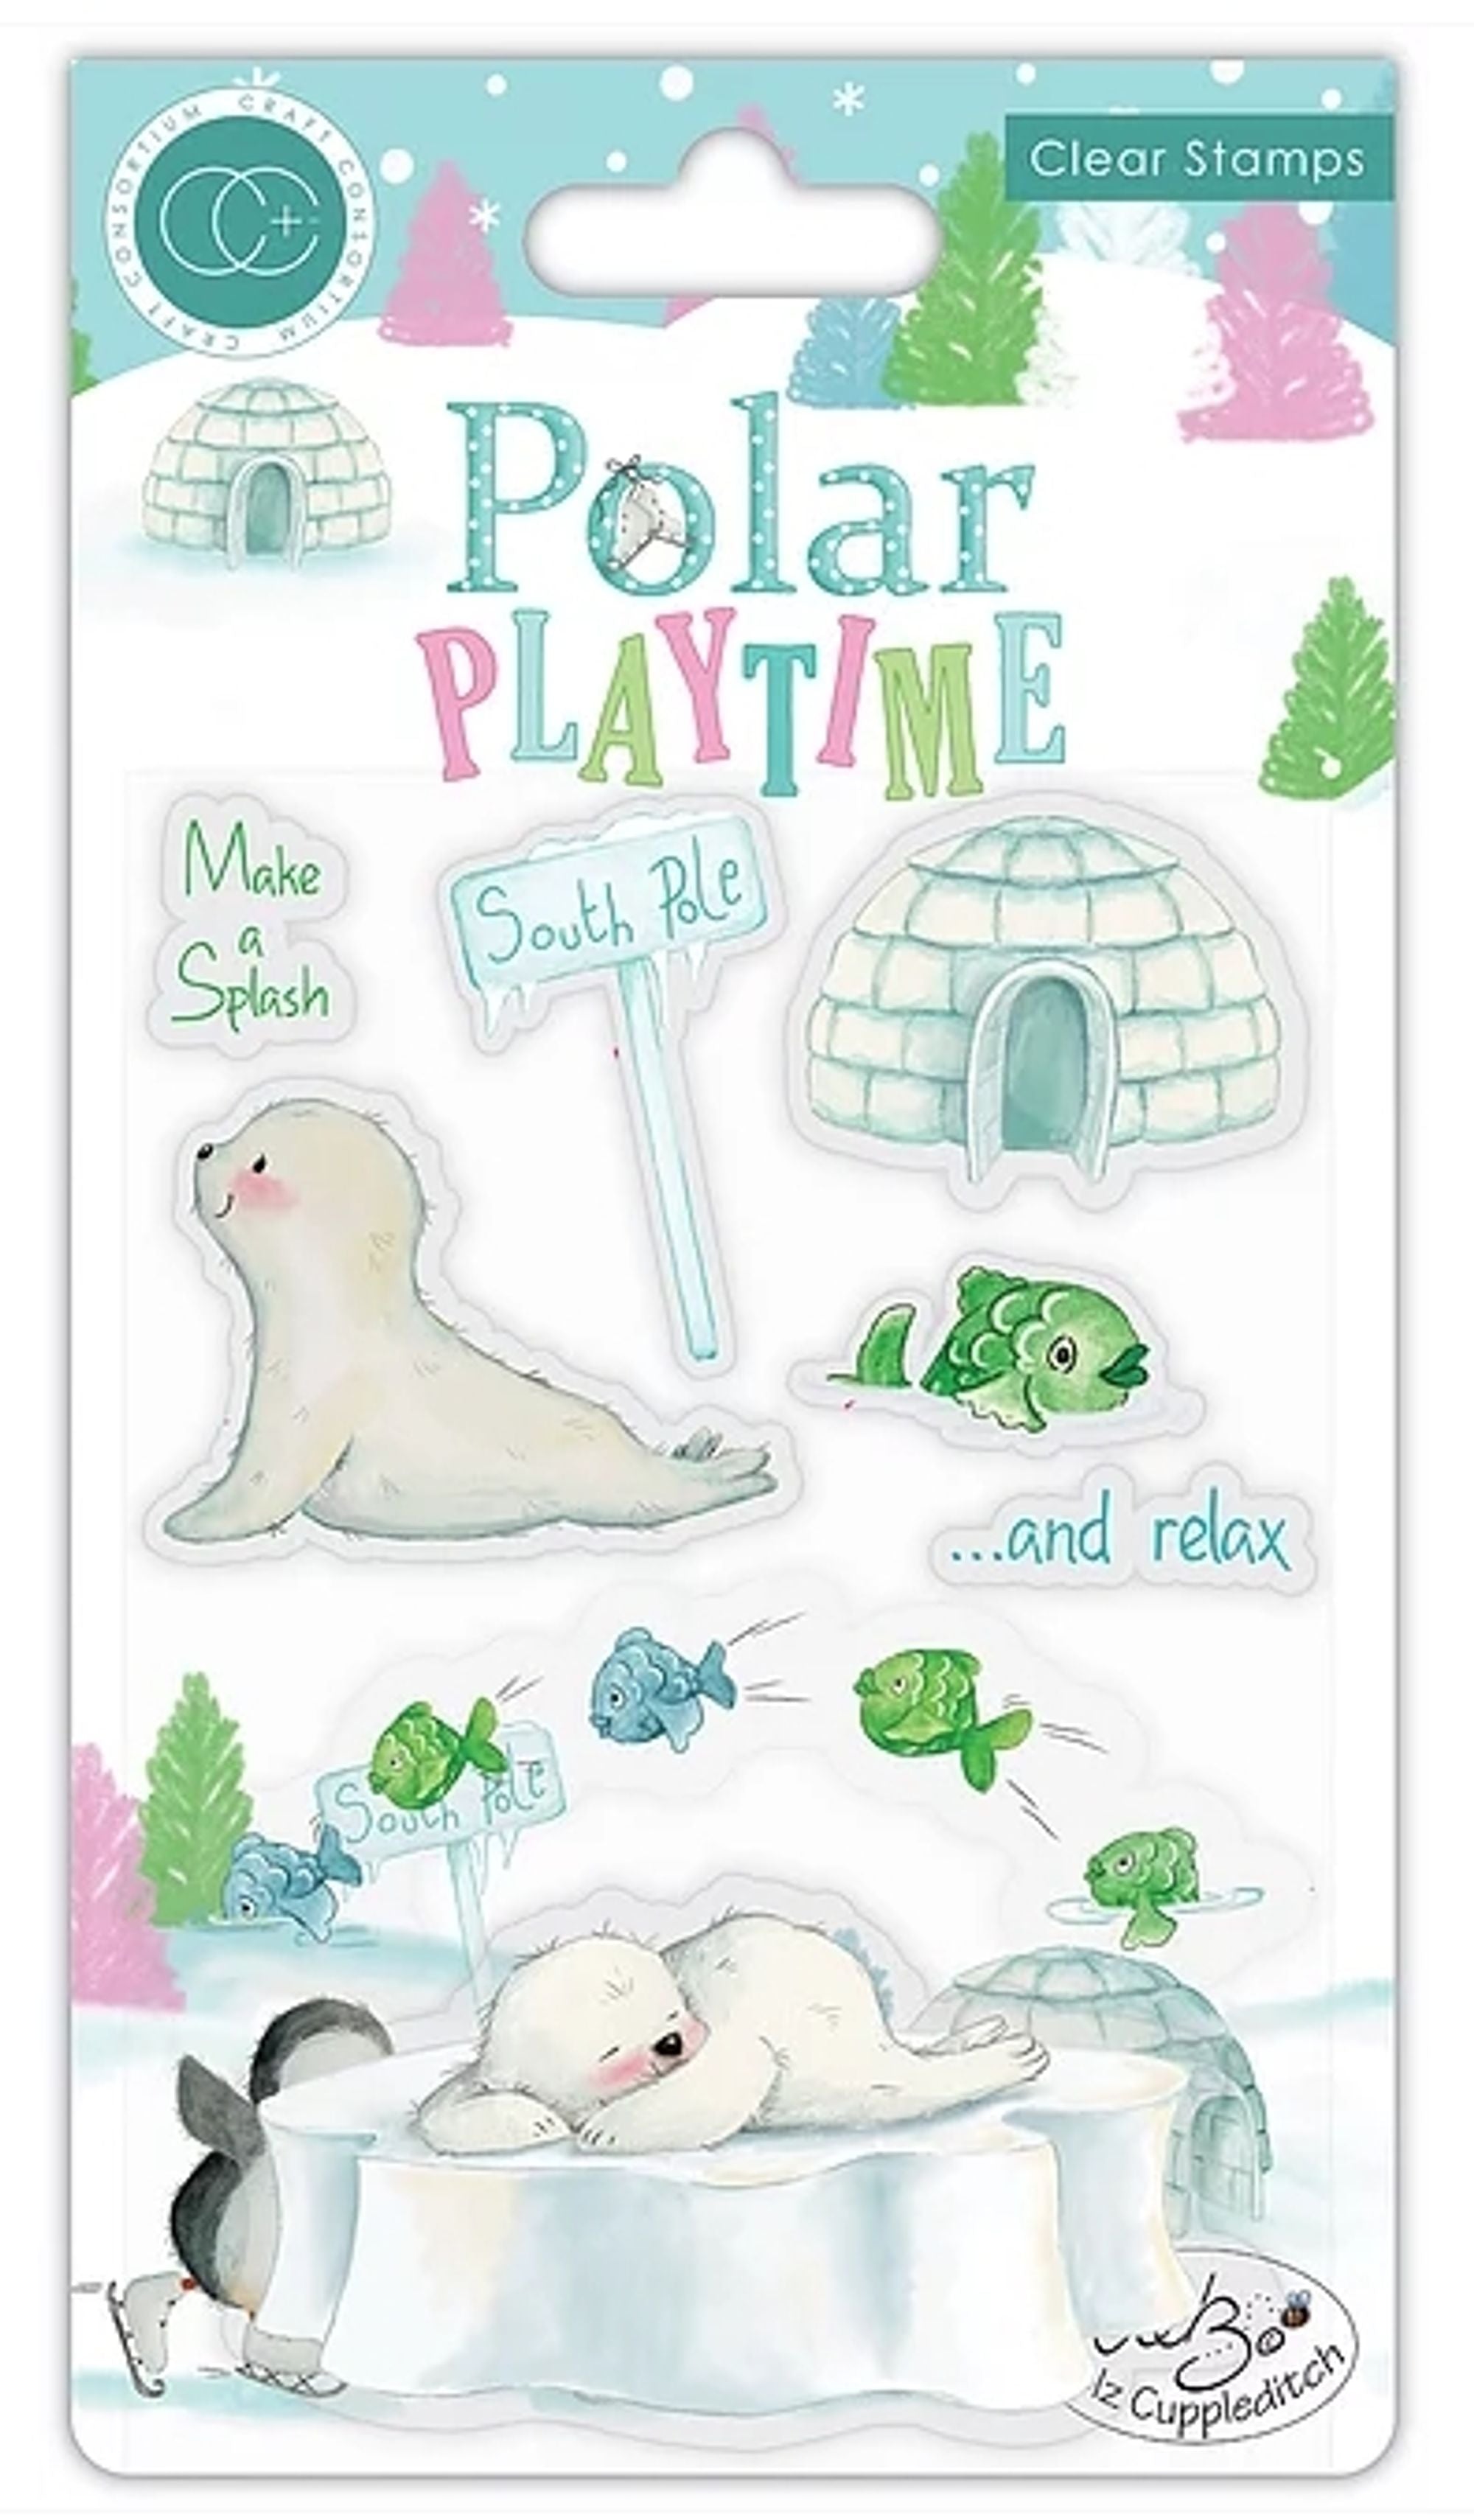 Polar Playtime - Make a Splash - Stamp Set